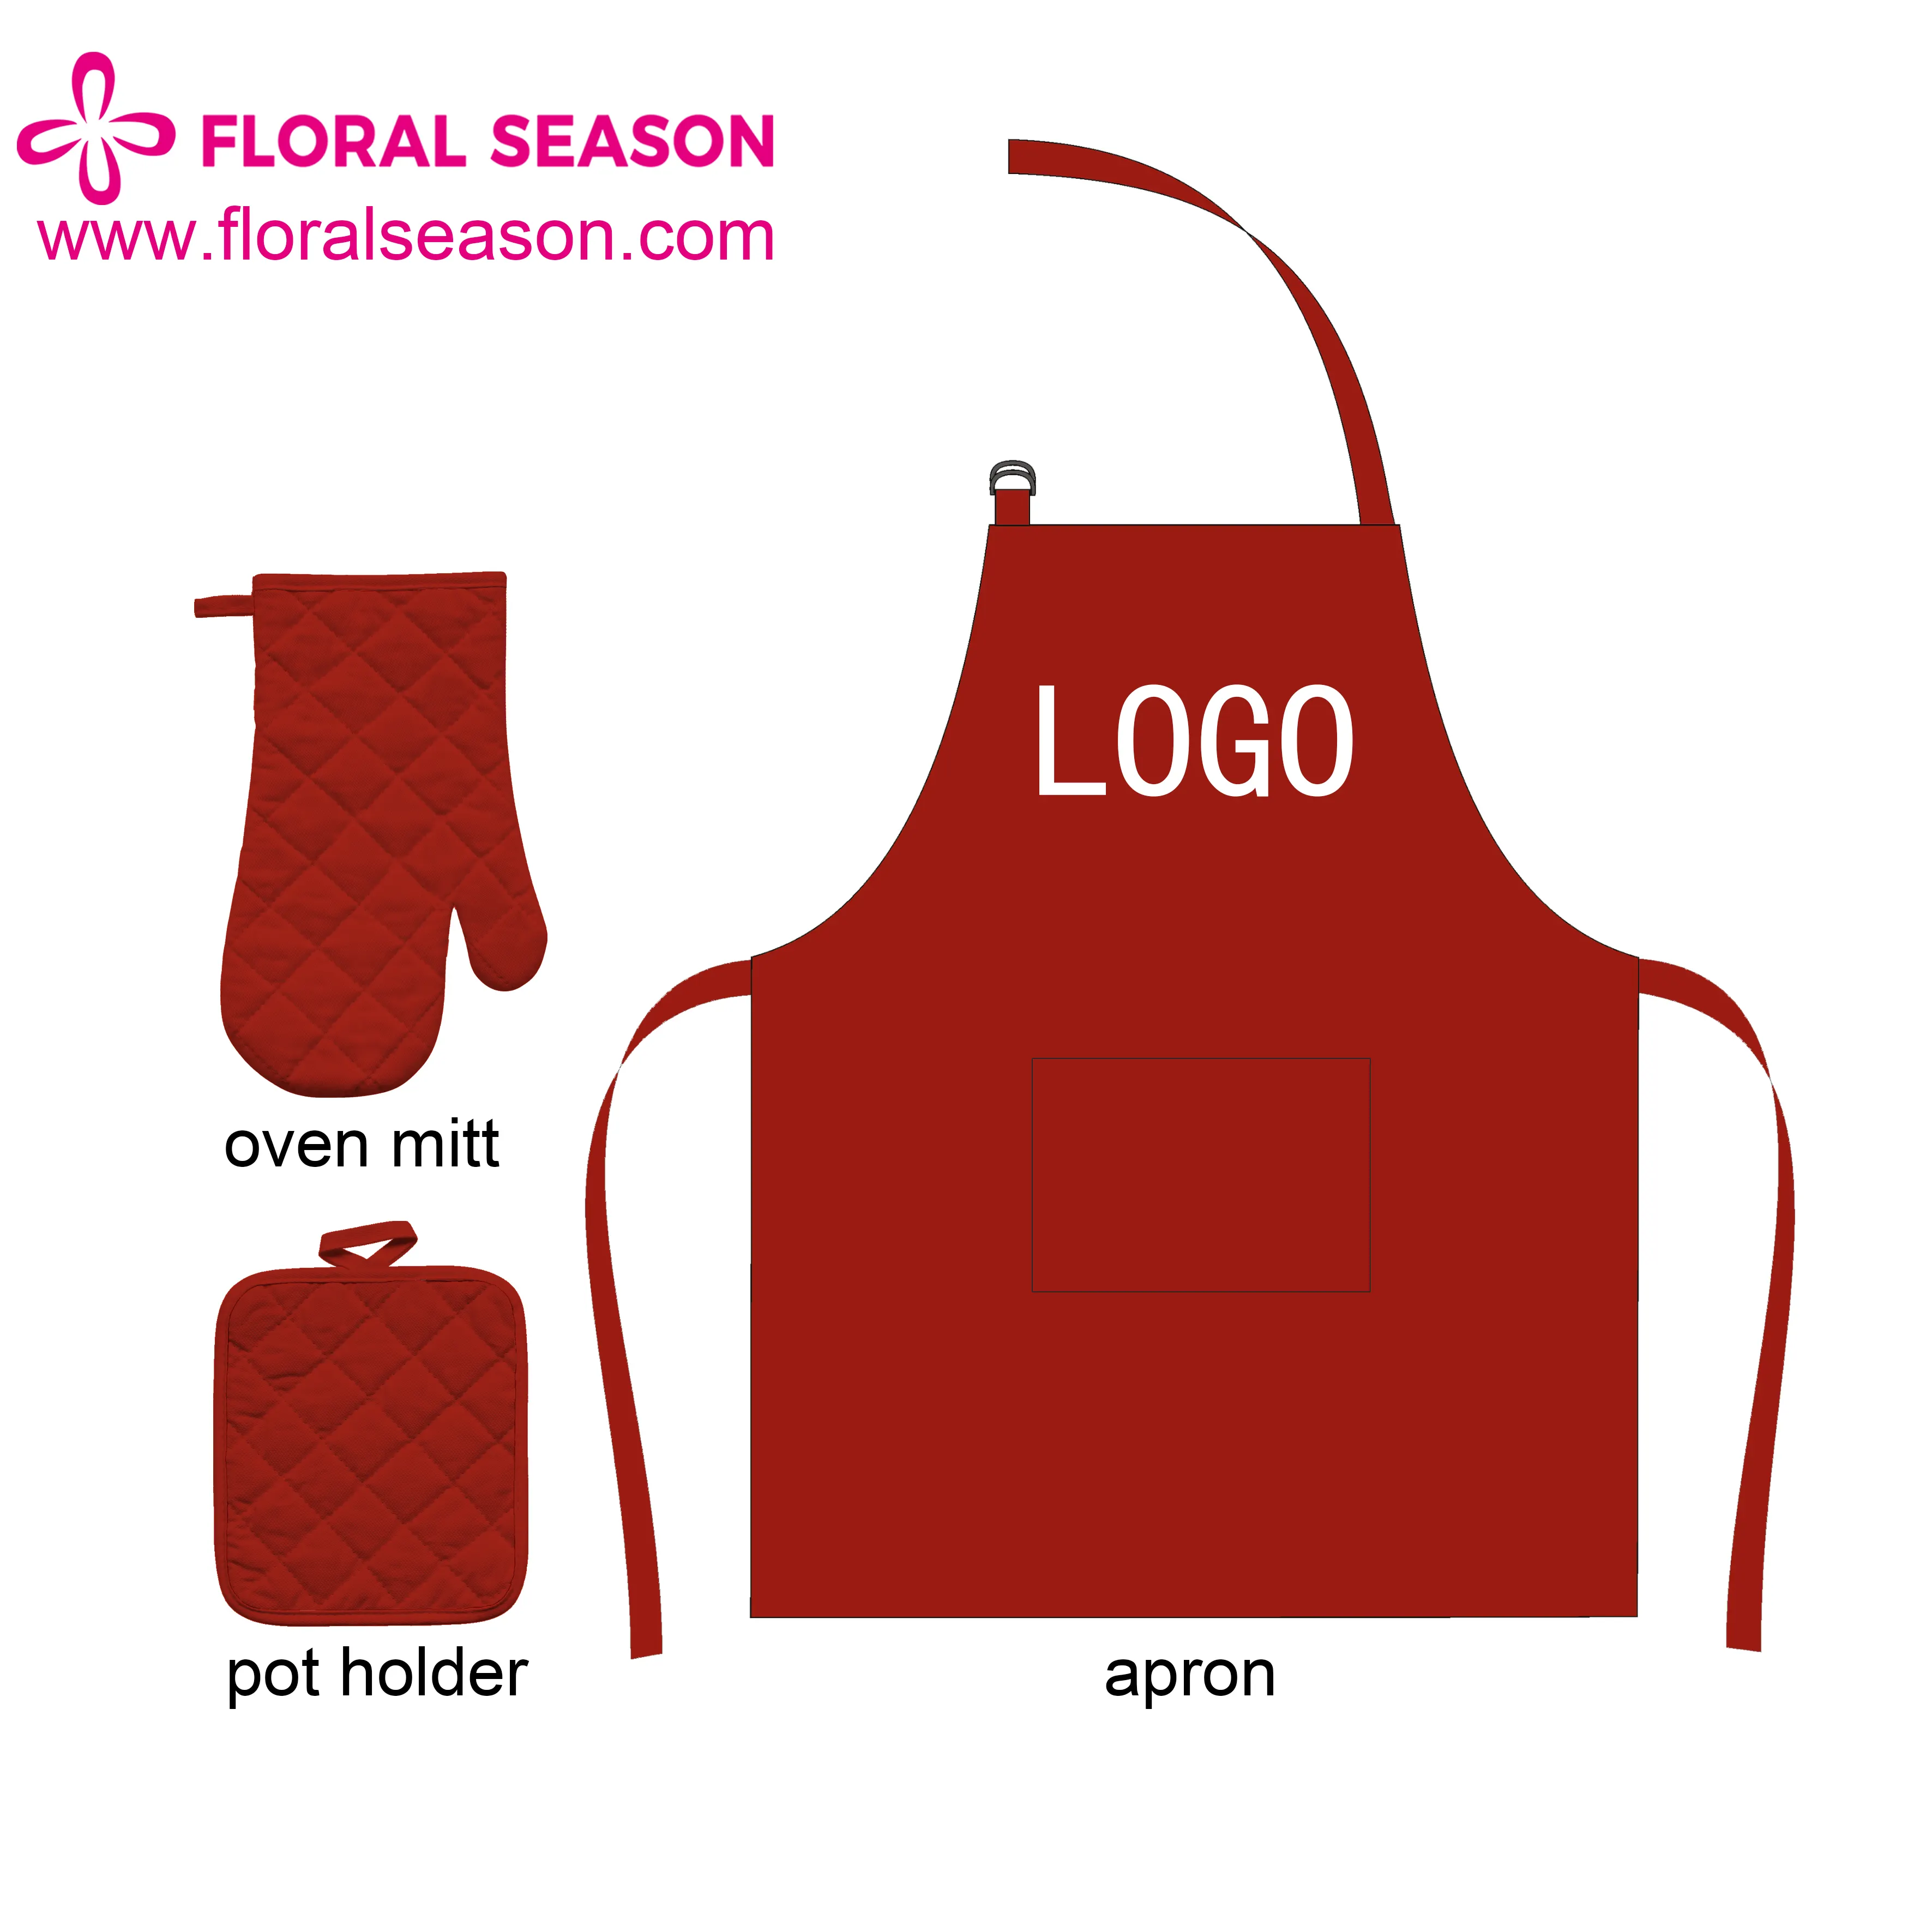 Custom Logo Printing Apron 100%cotton Fabric Sublimation With Adjustable Straps